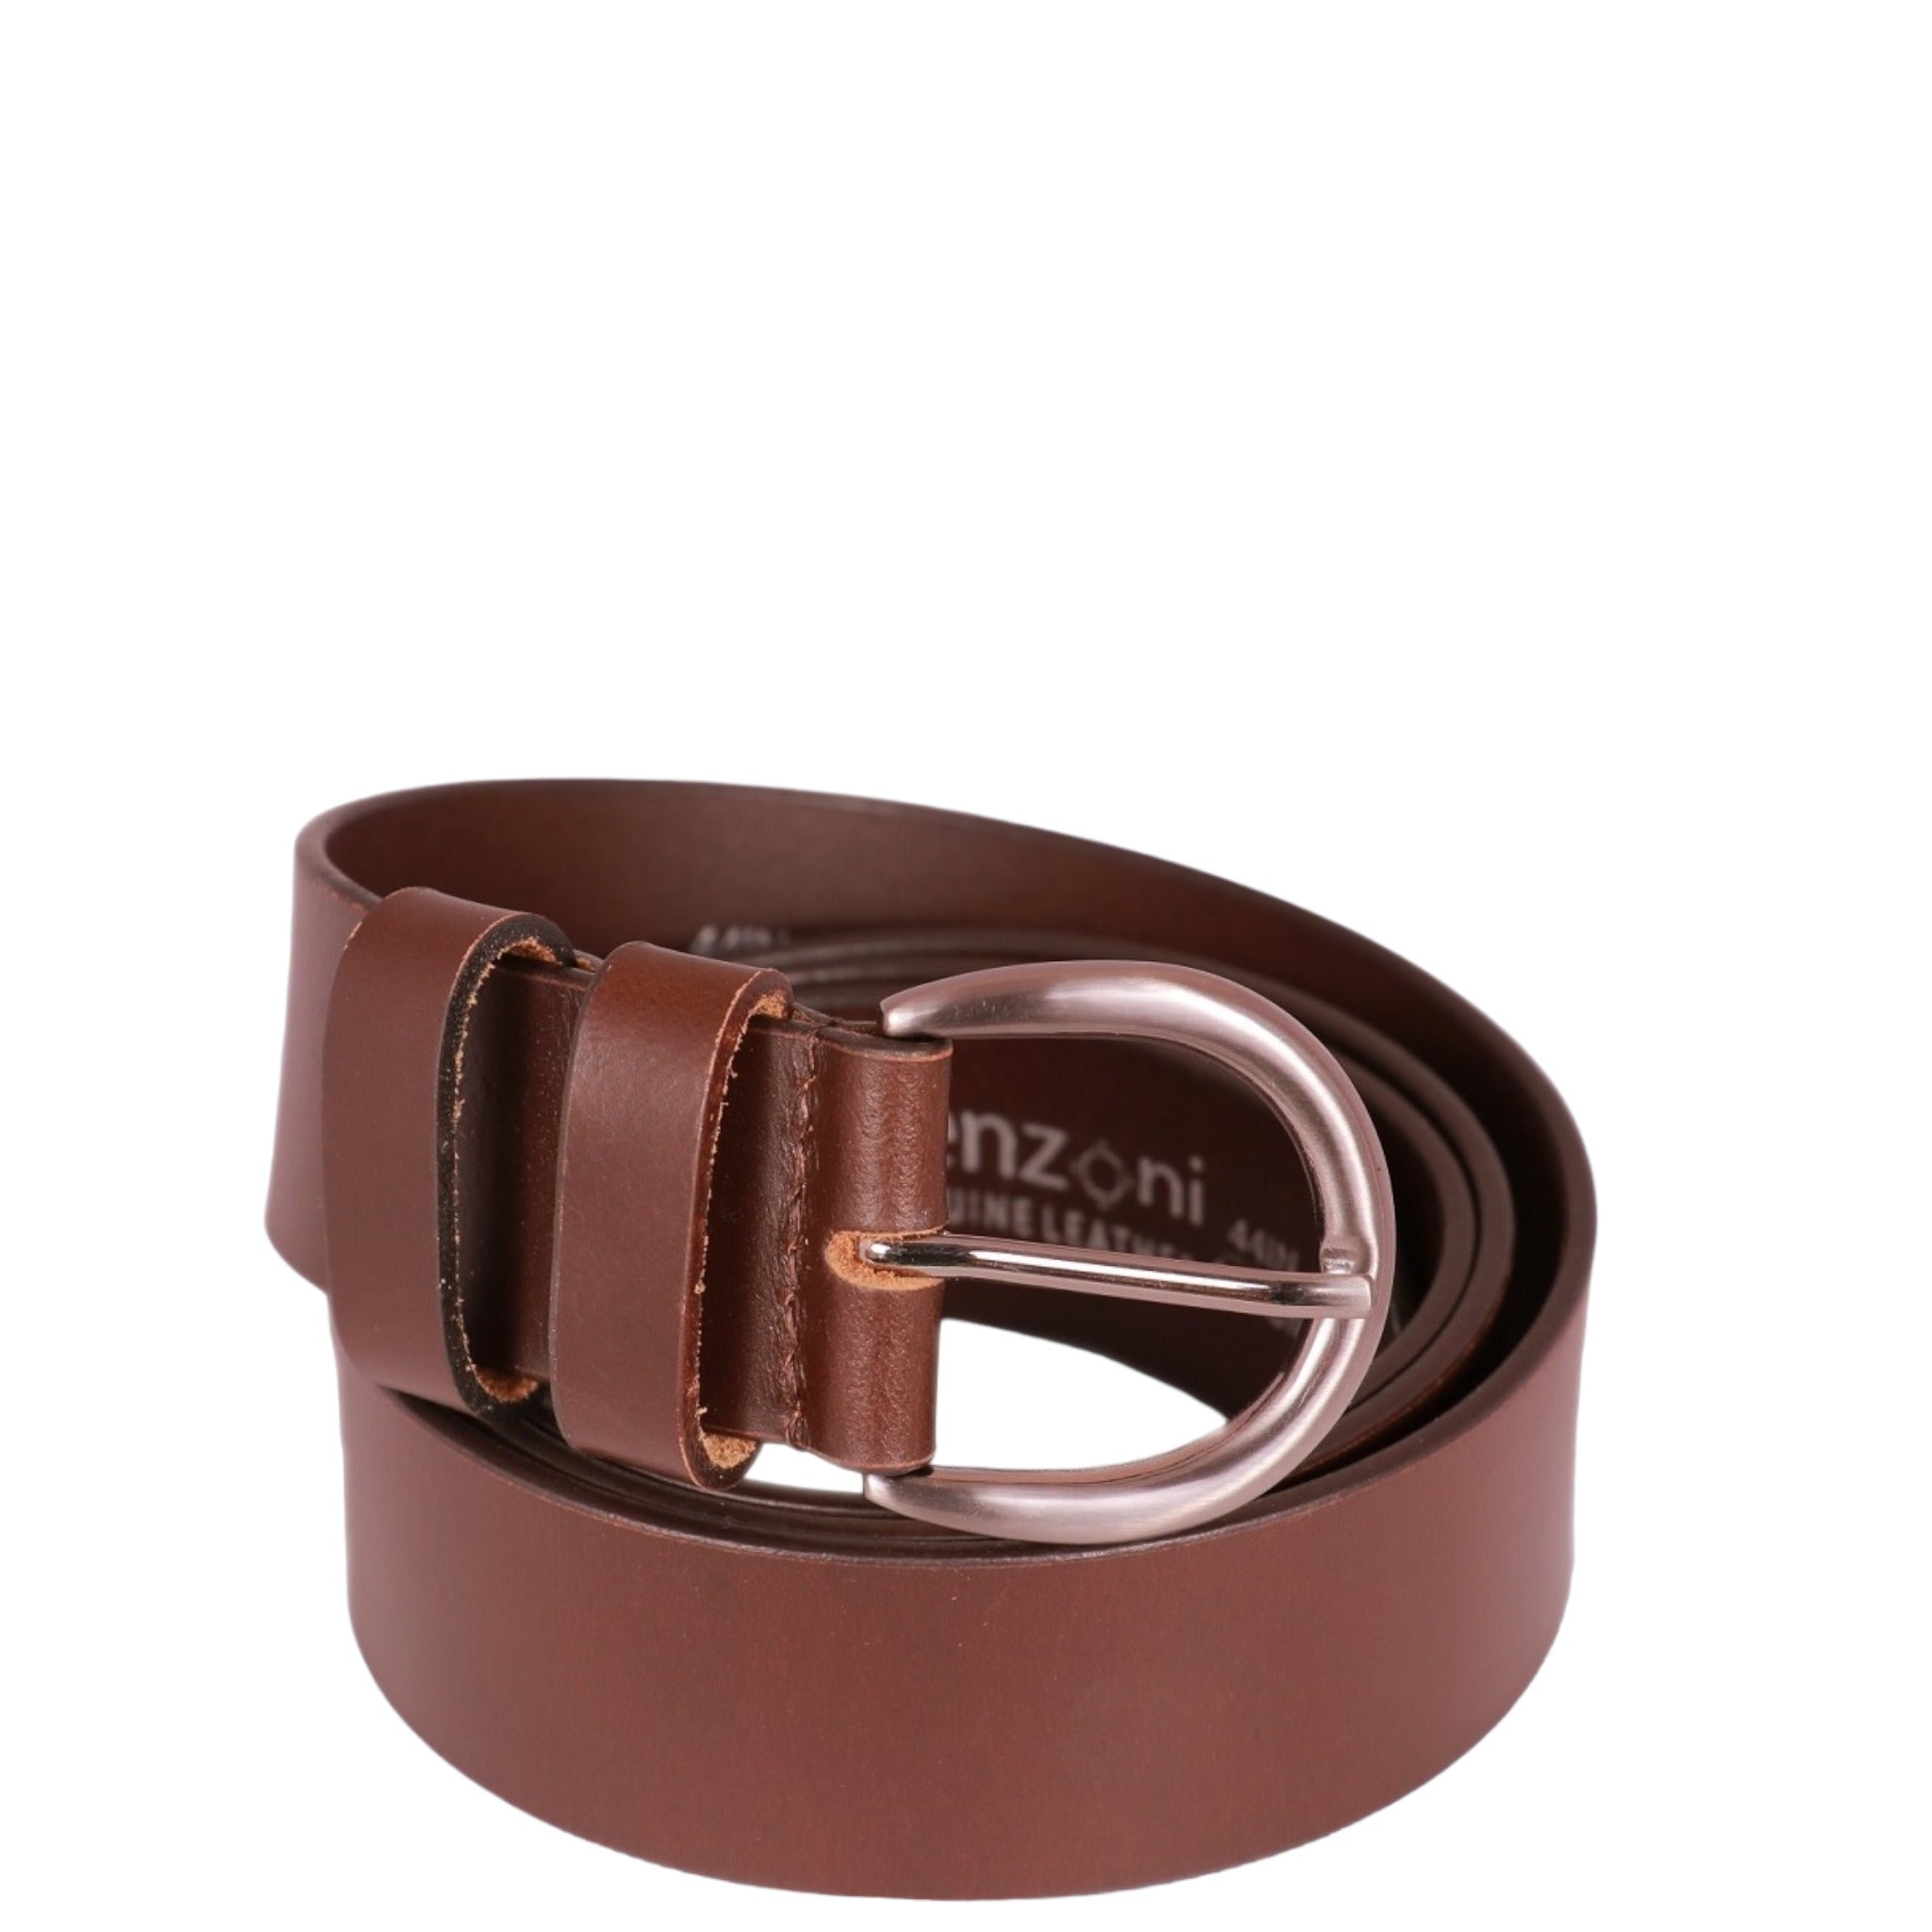 Brown Double Loop Leather Belt. 38mm width.